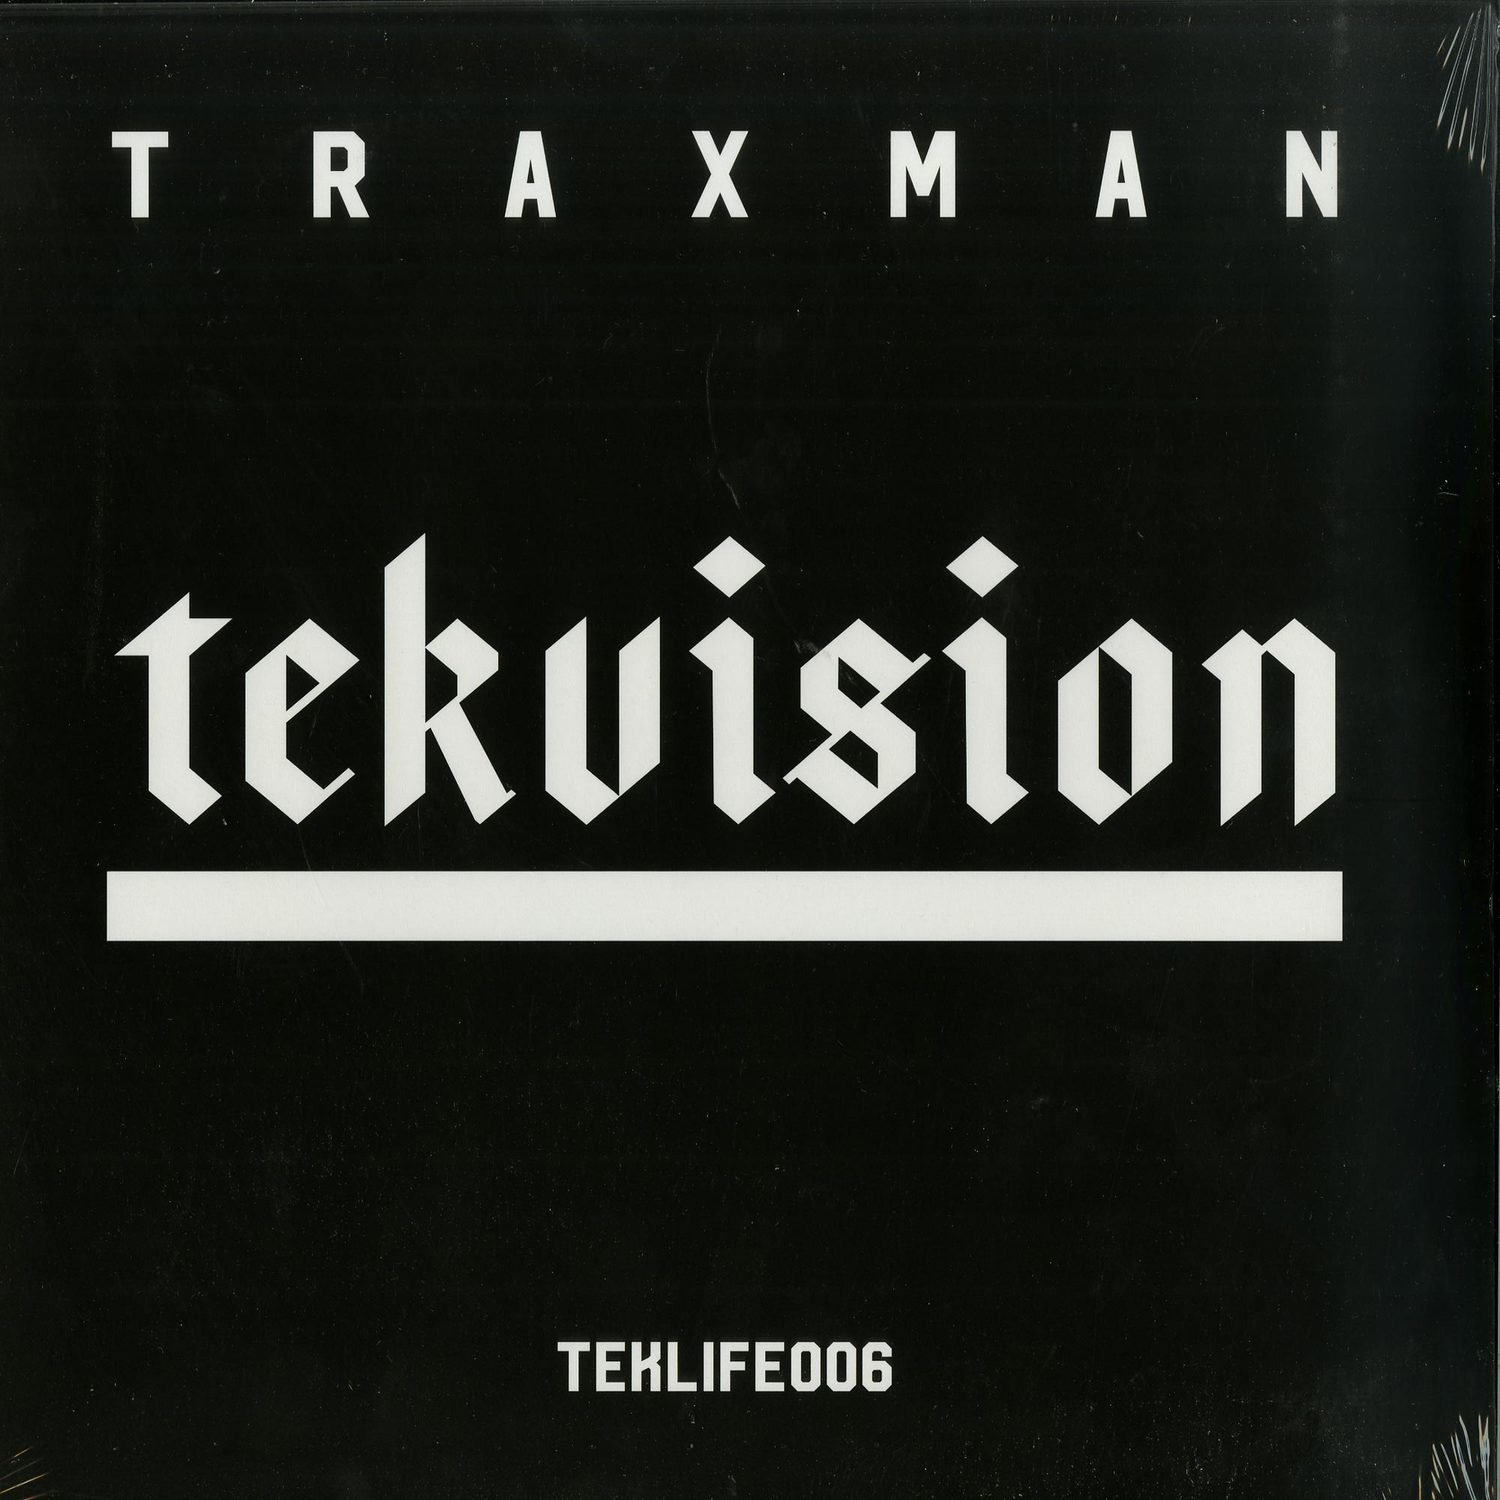 Traxman - TEKVISION 